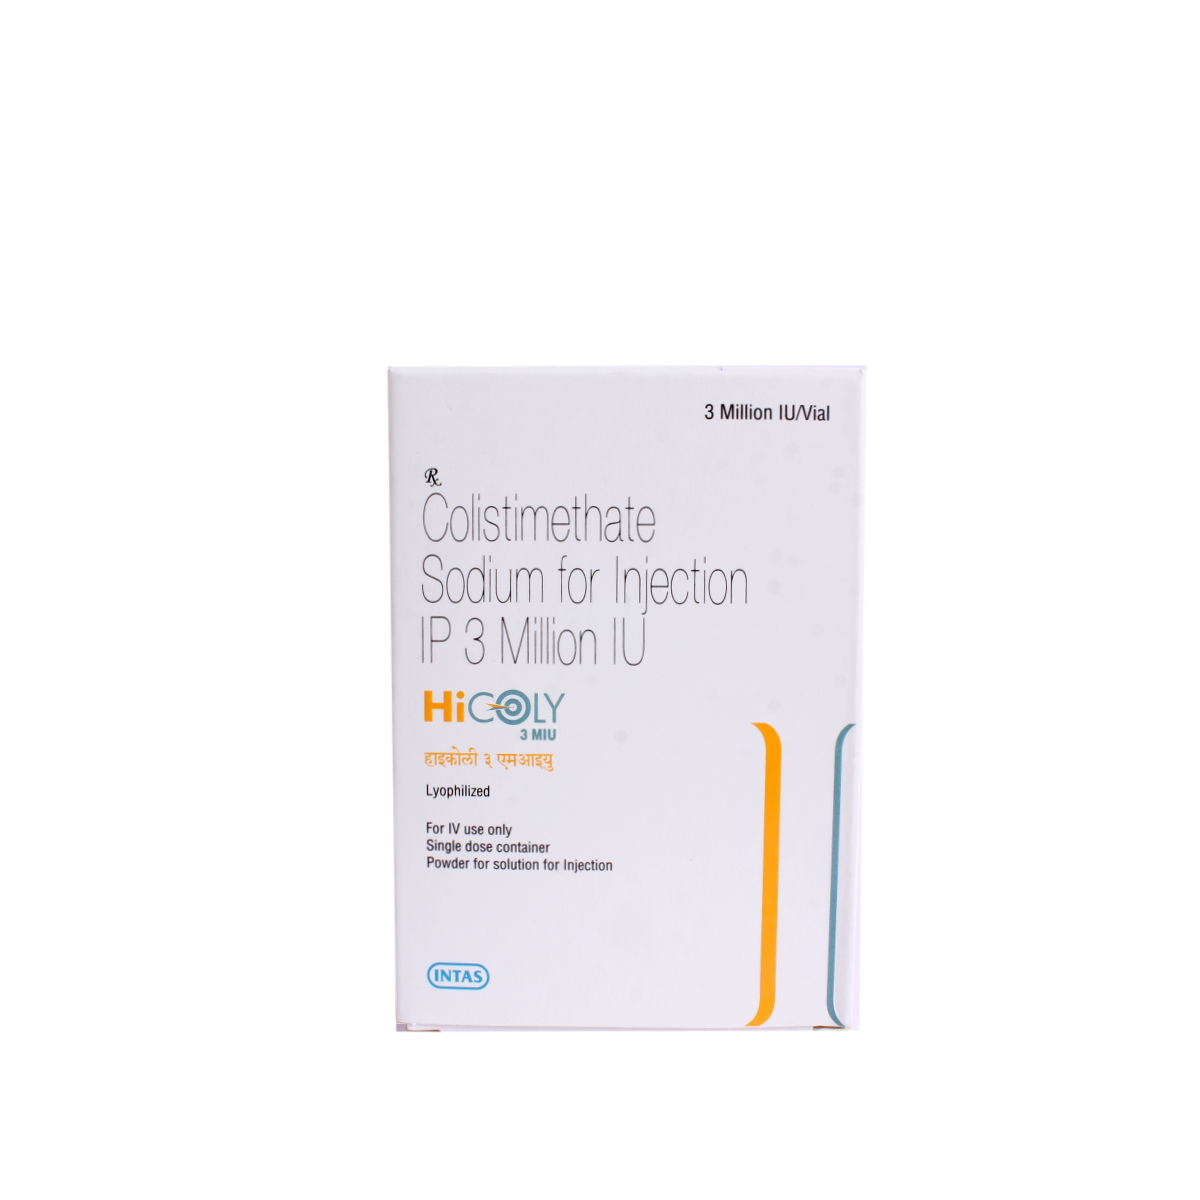 Buy Hicoly 3 MIU Injection 1's Online